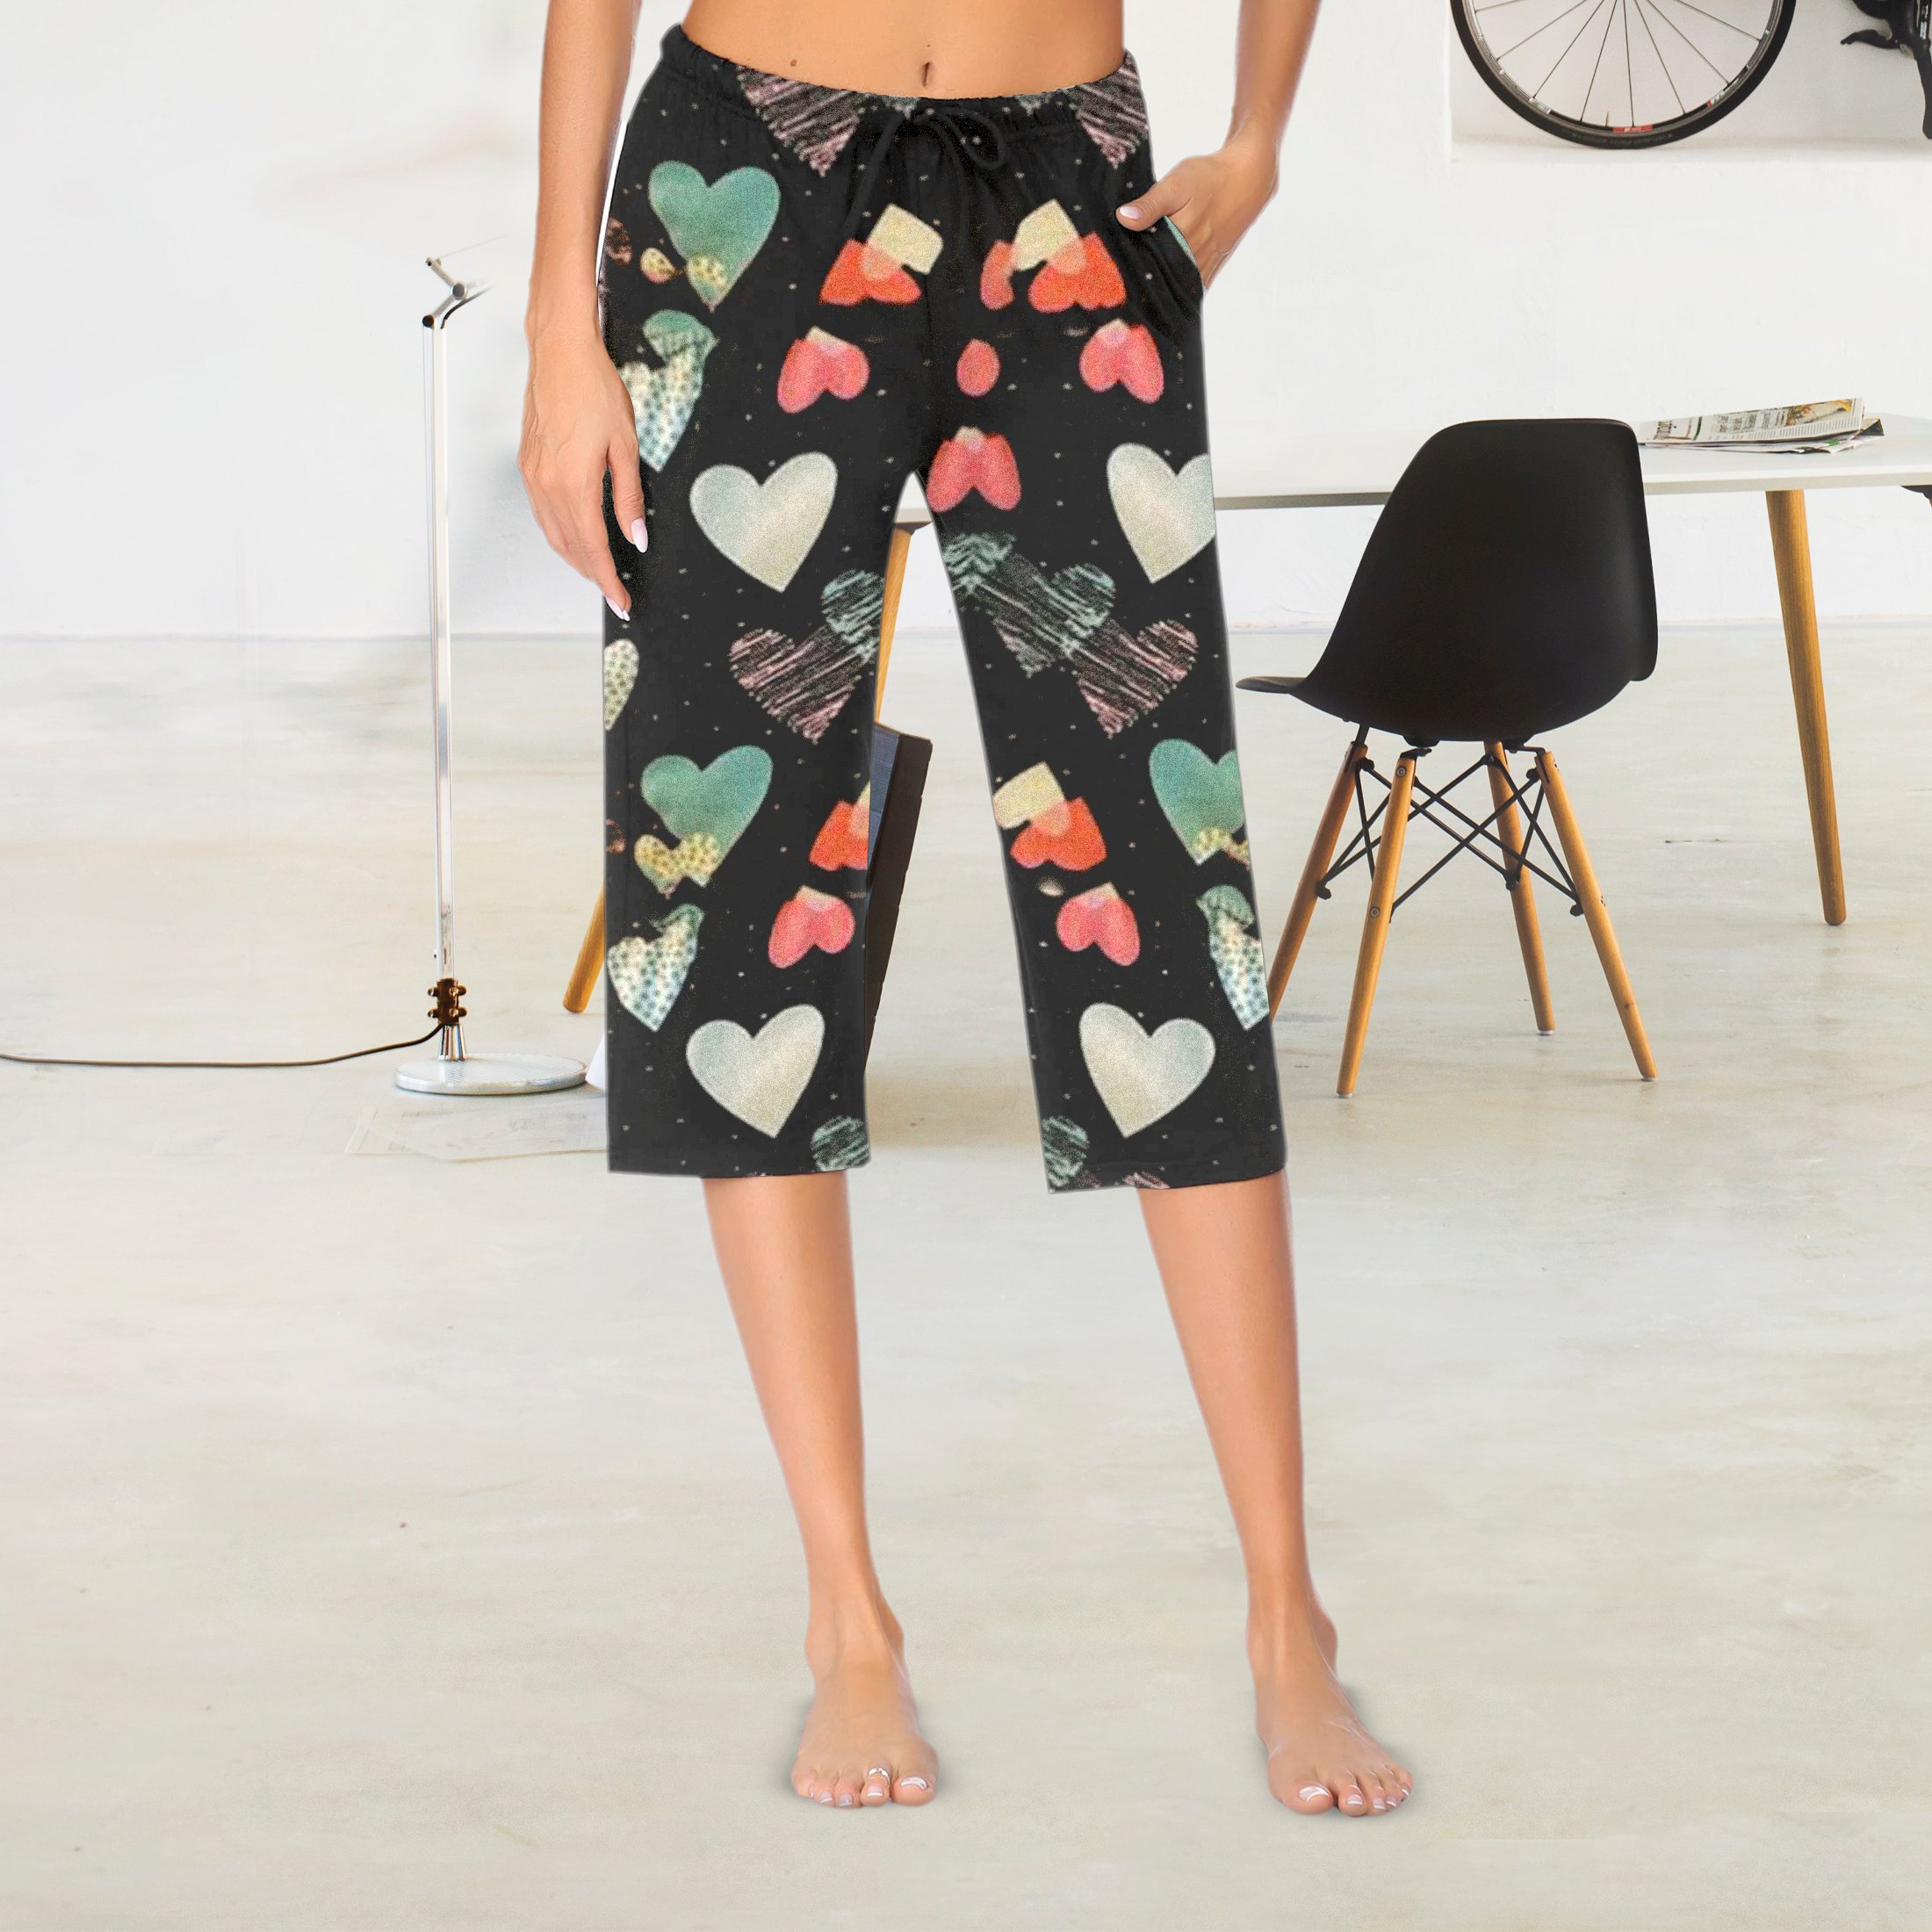 Bargain Hunters 5-Pack Womens Capri Pajama Pants Soft Comfy Printed Summer Sleepwear Ladies PJ Bottom With Drawstring